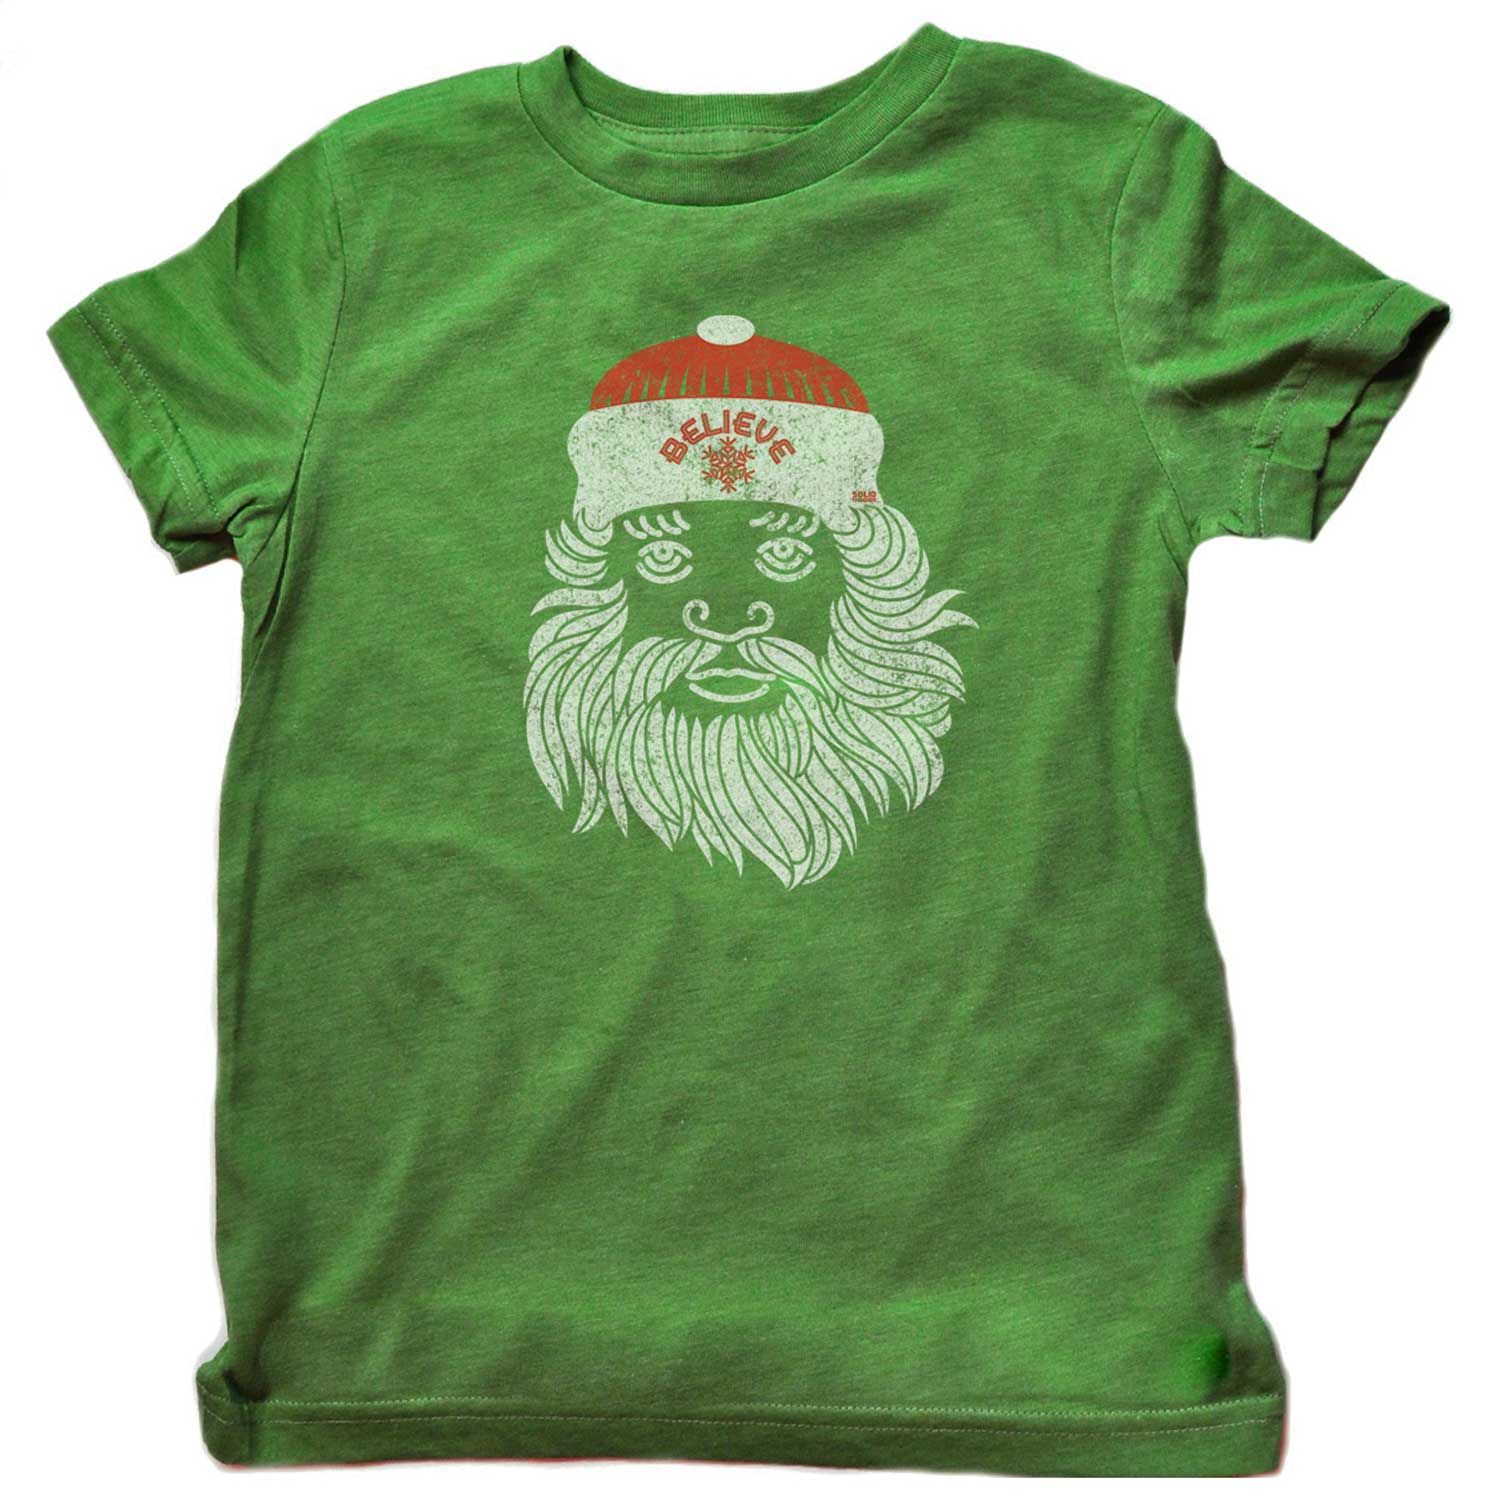 Kids Believe In Santa Cool Graphic T-Shirt | Retro Christmas Spirit Soft Tee | Solid Threads